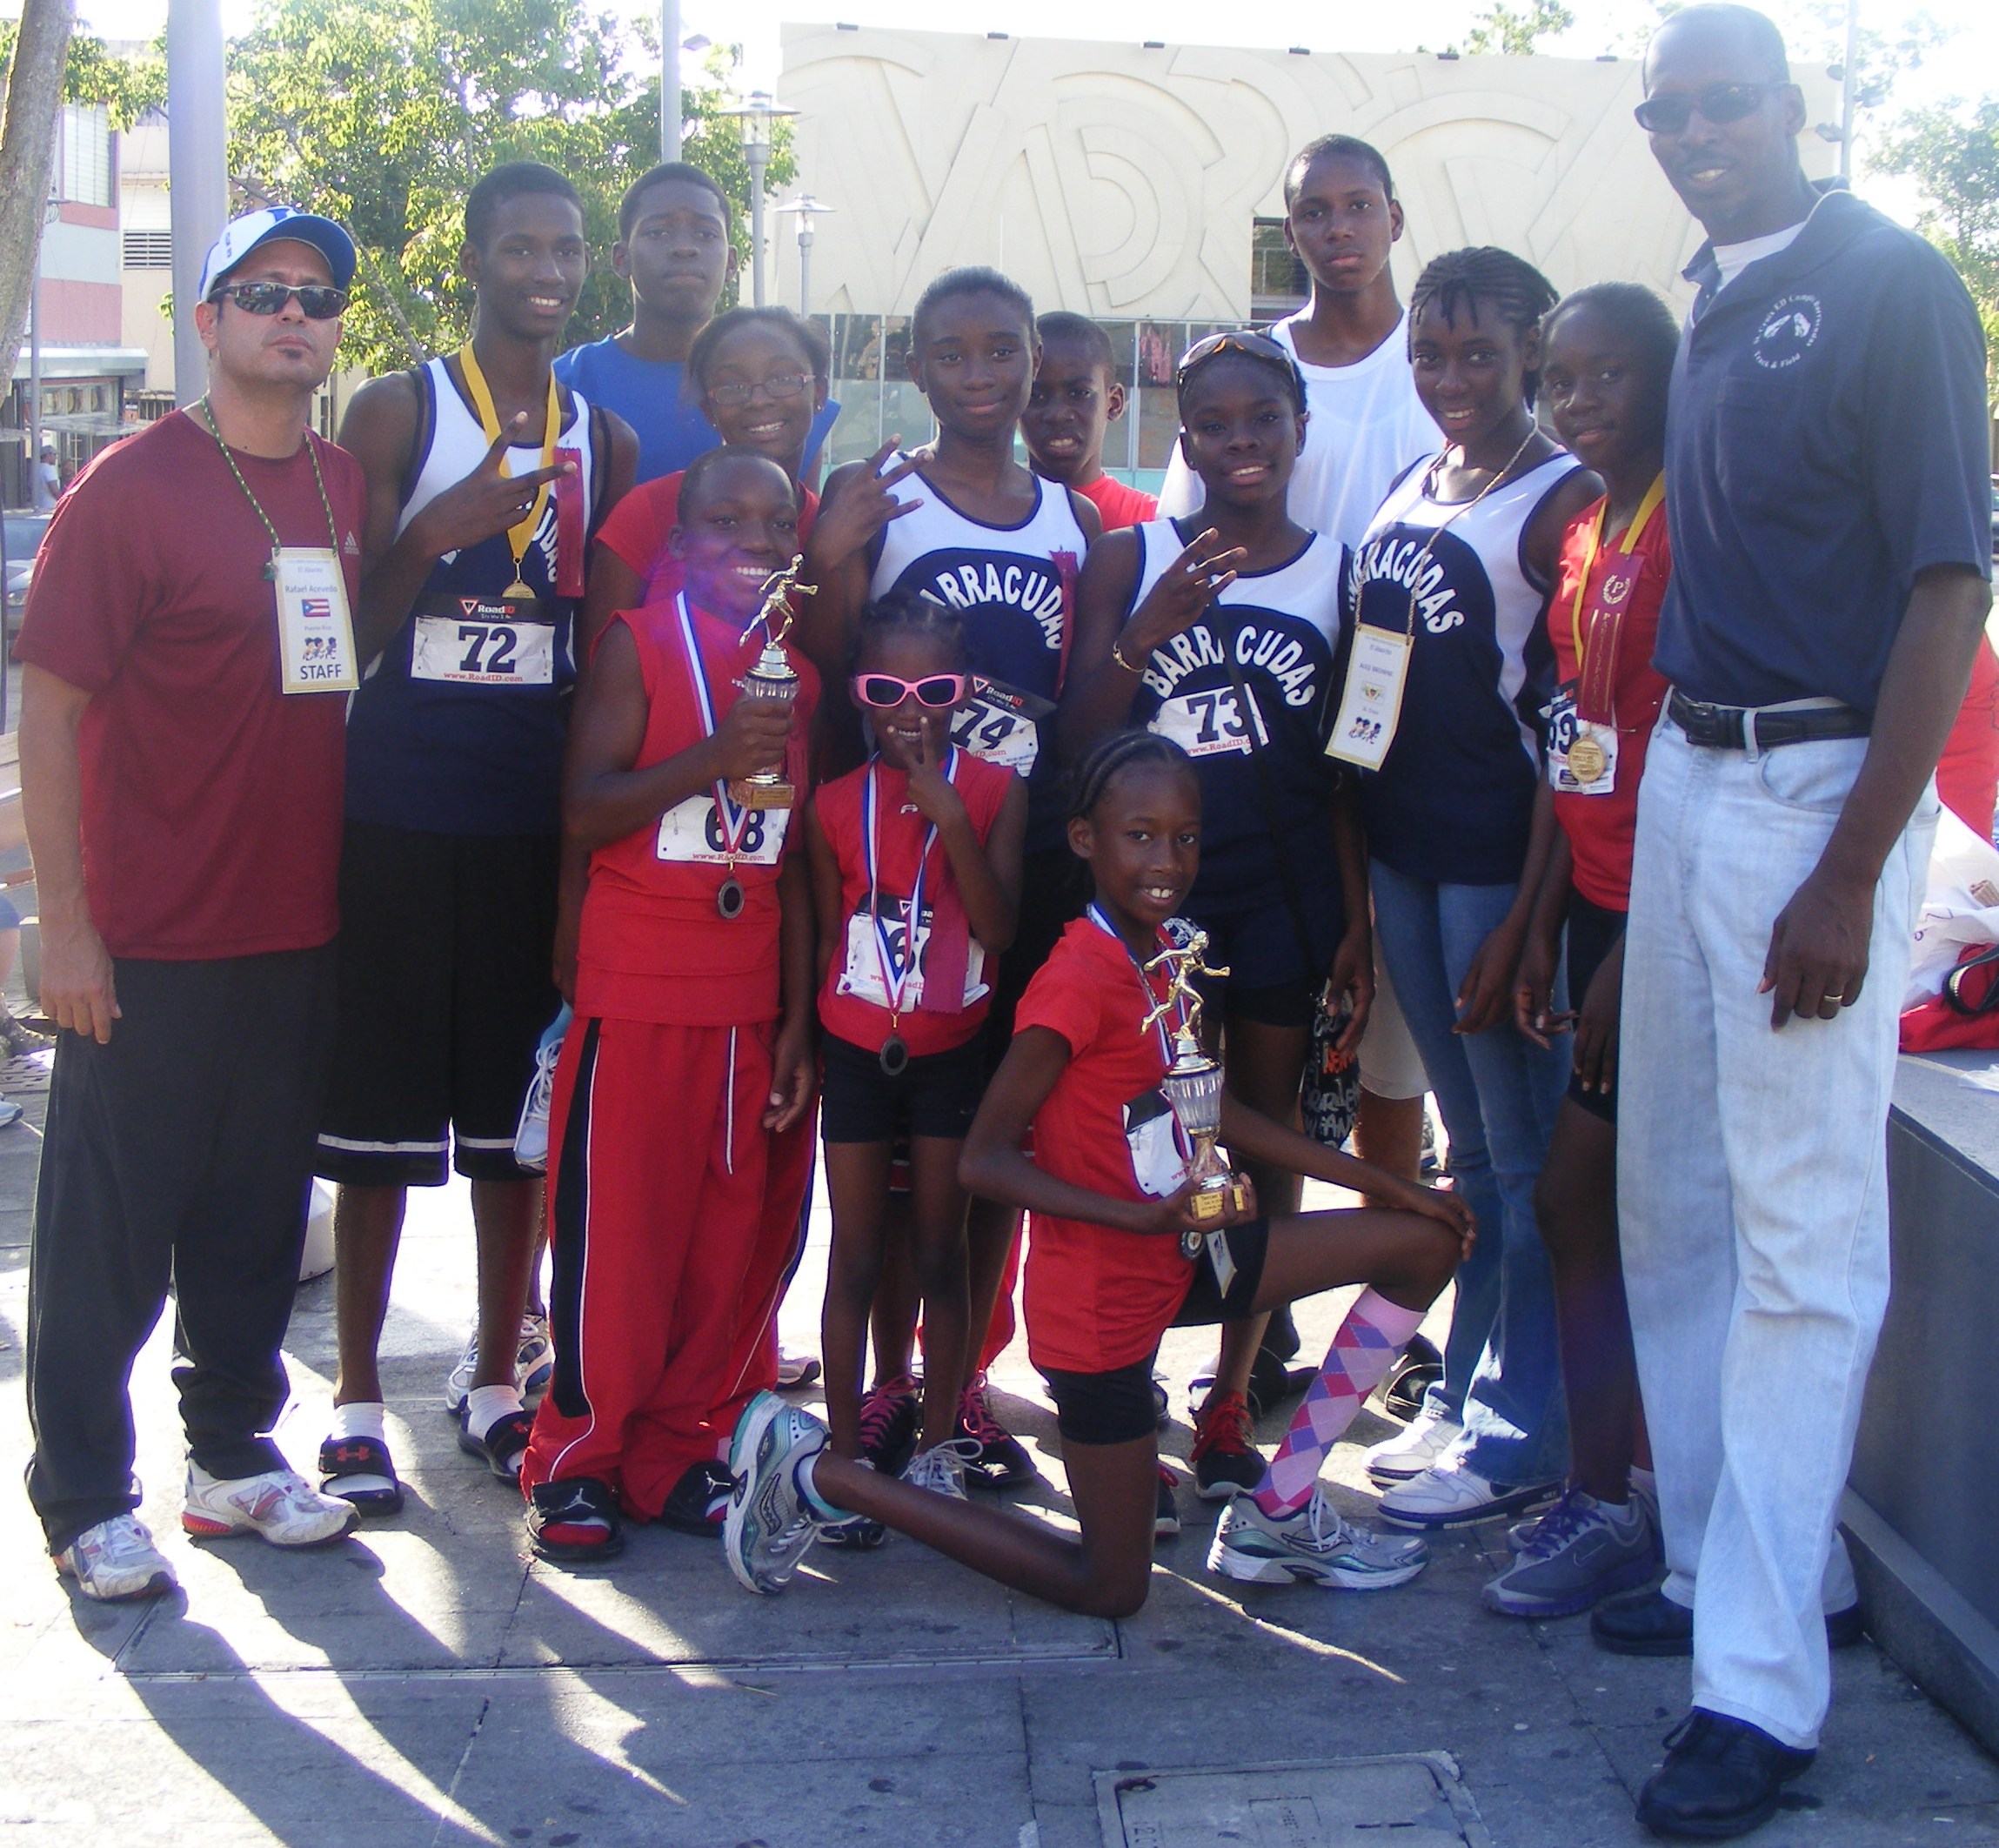 St. Croix Athletes Compete at El Jabarito International Mile